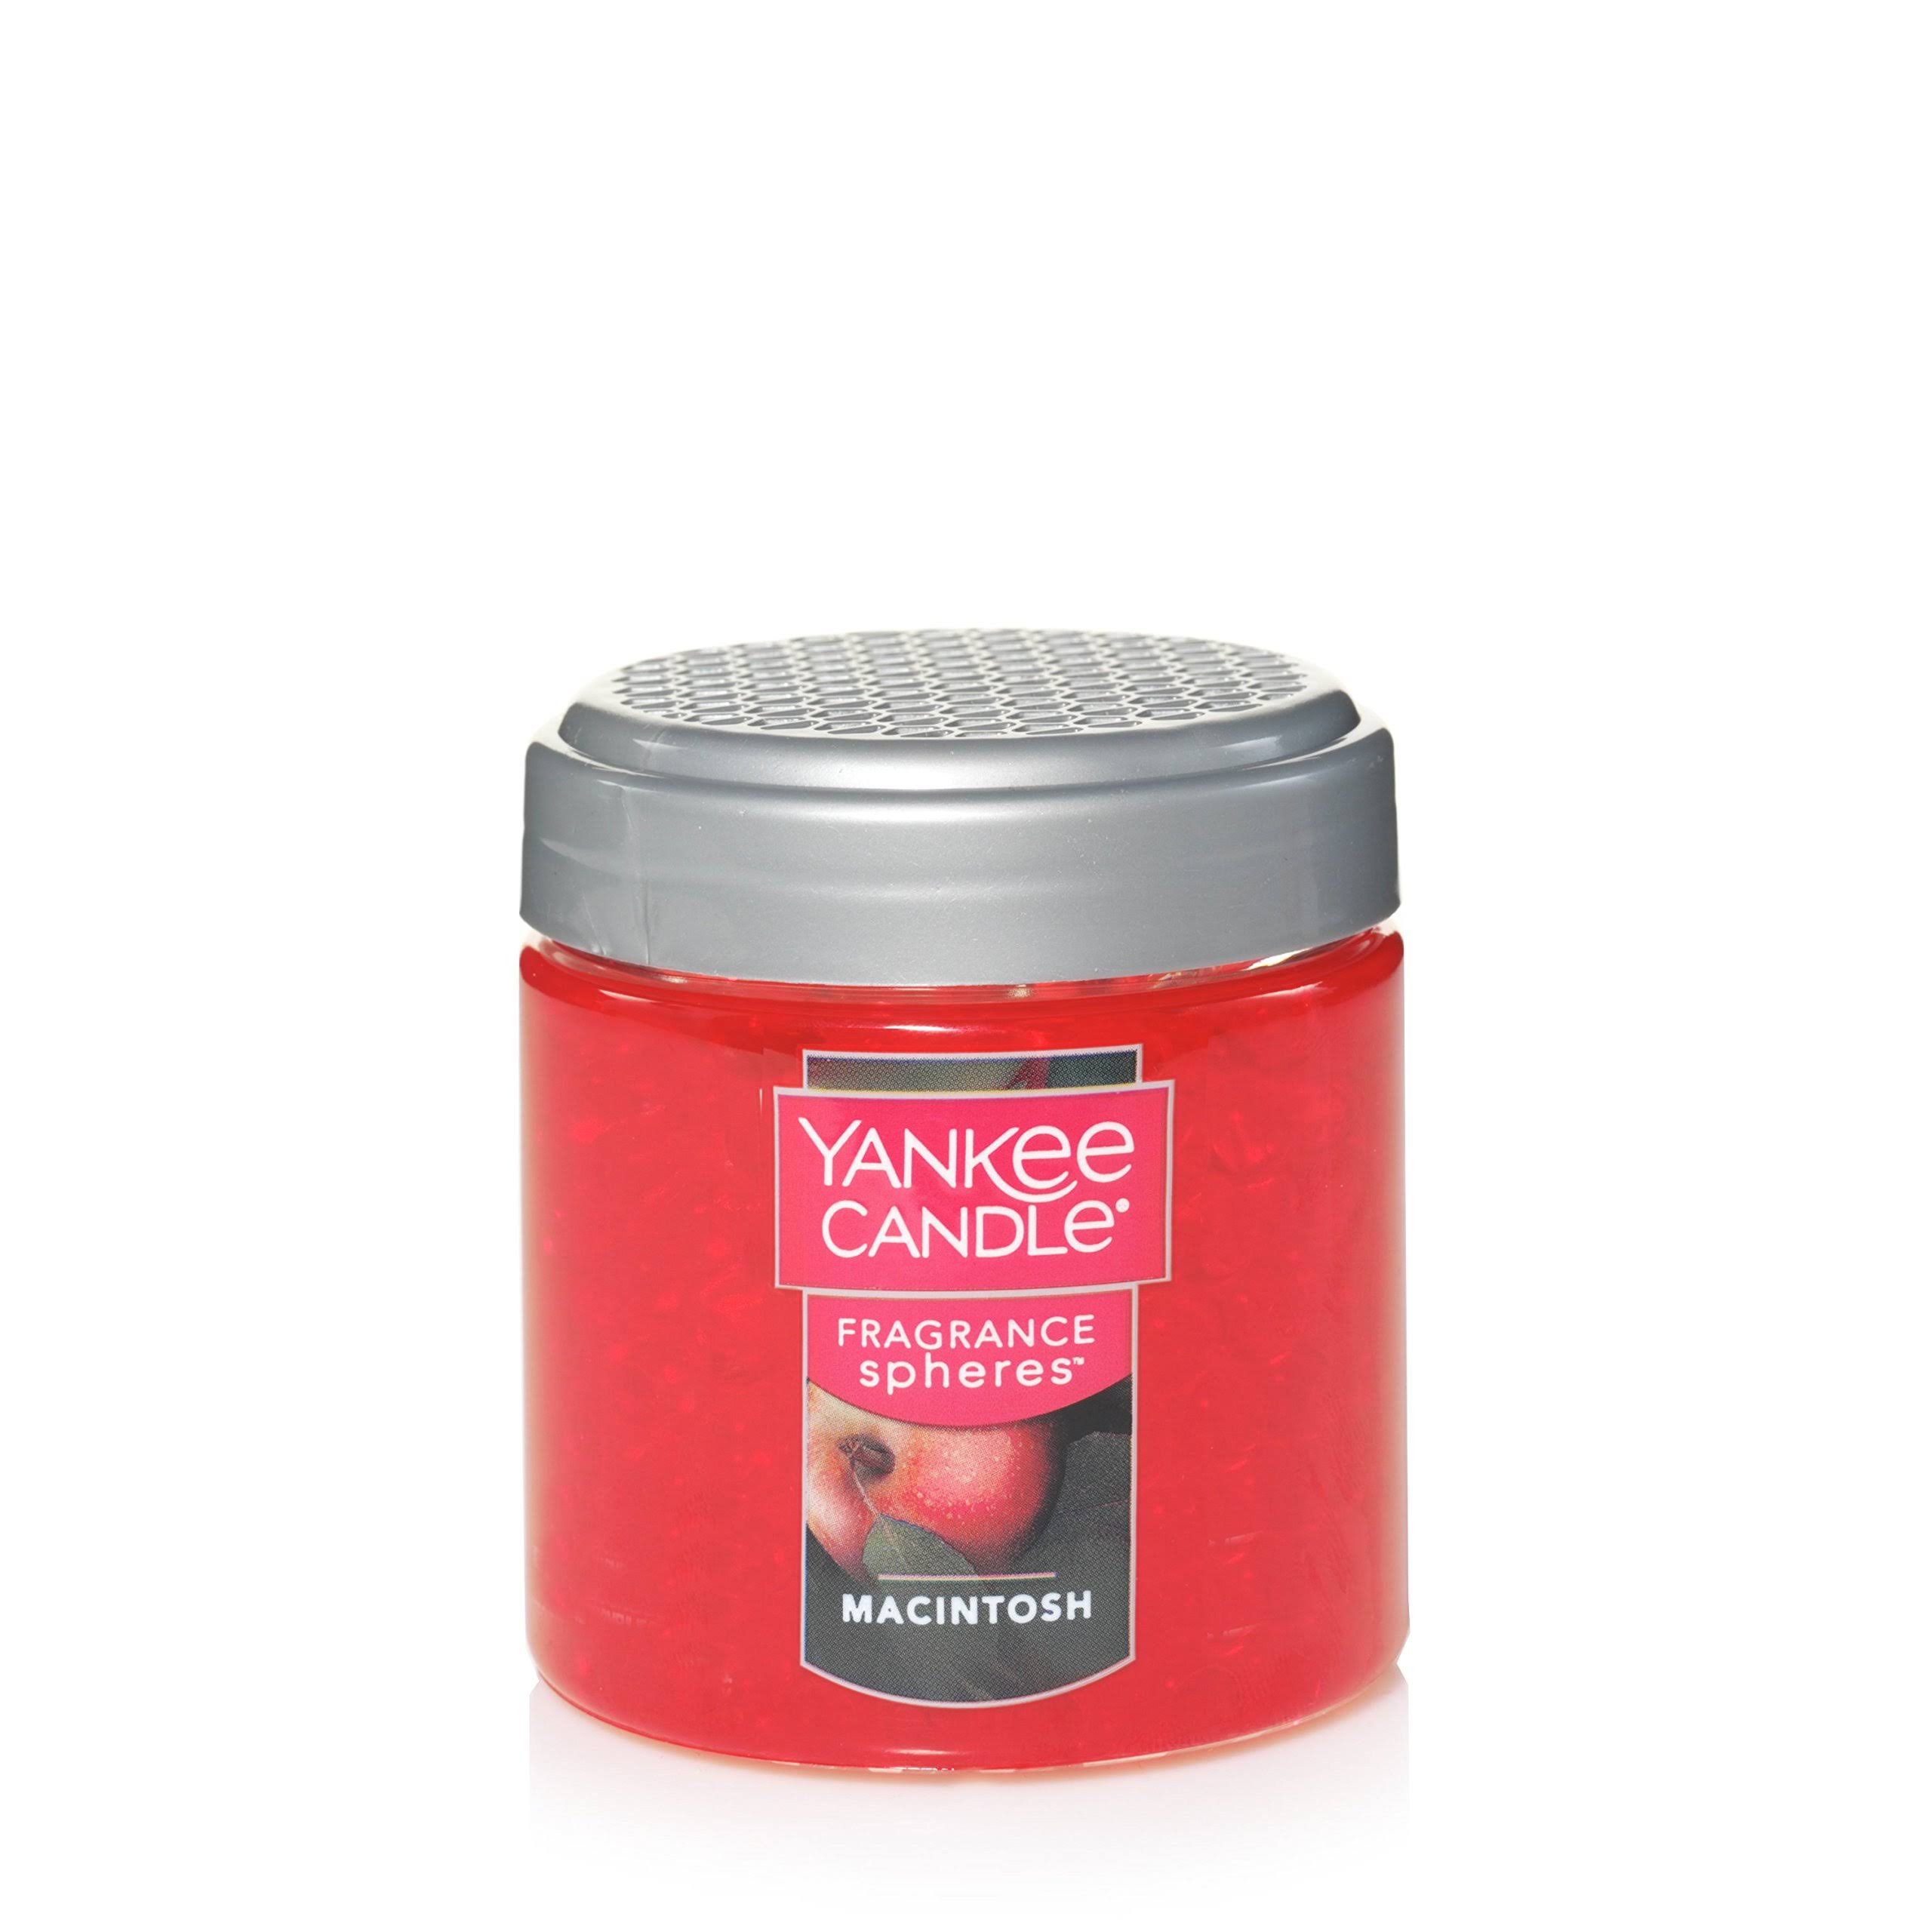 Yankee Candle Fragrance Spheres Macintosh